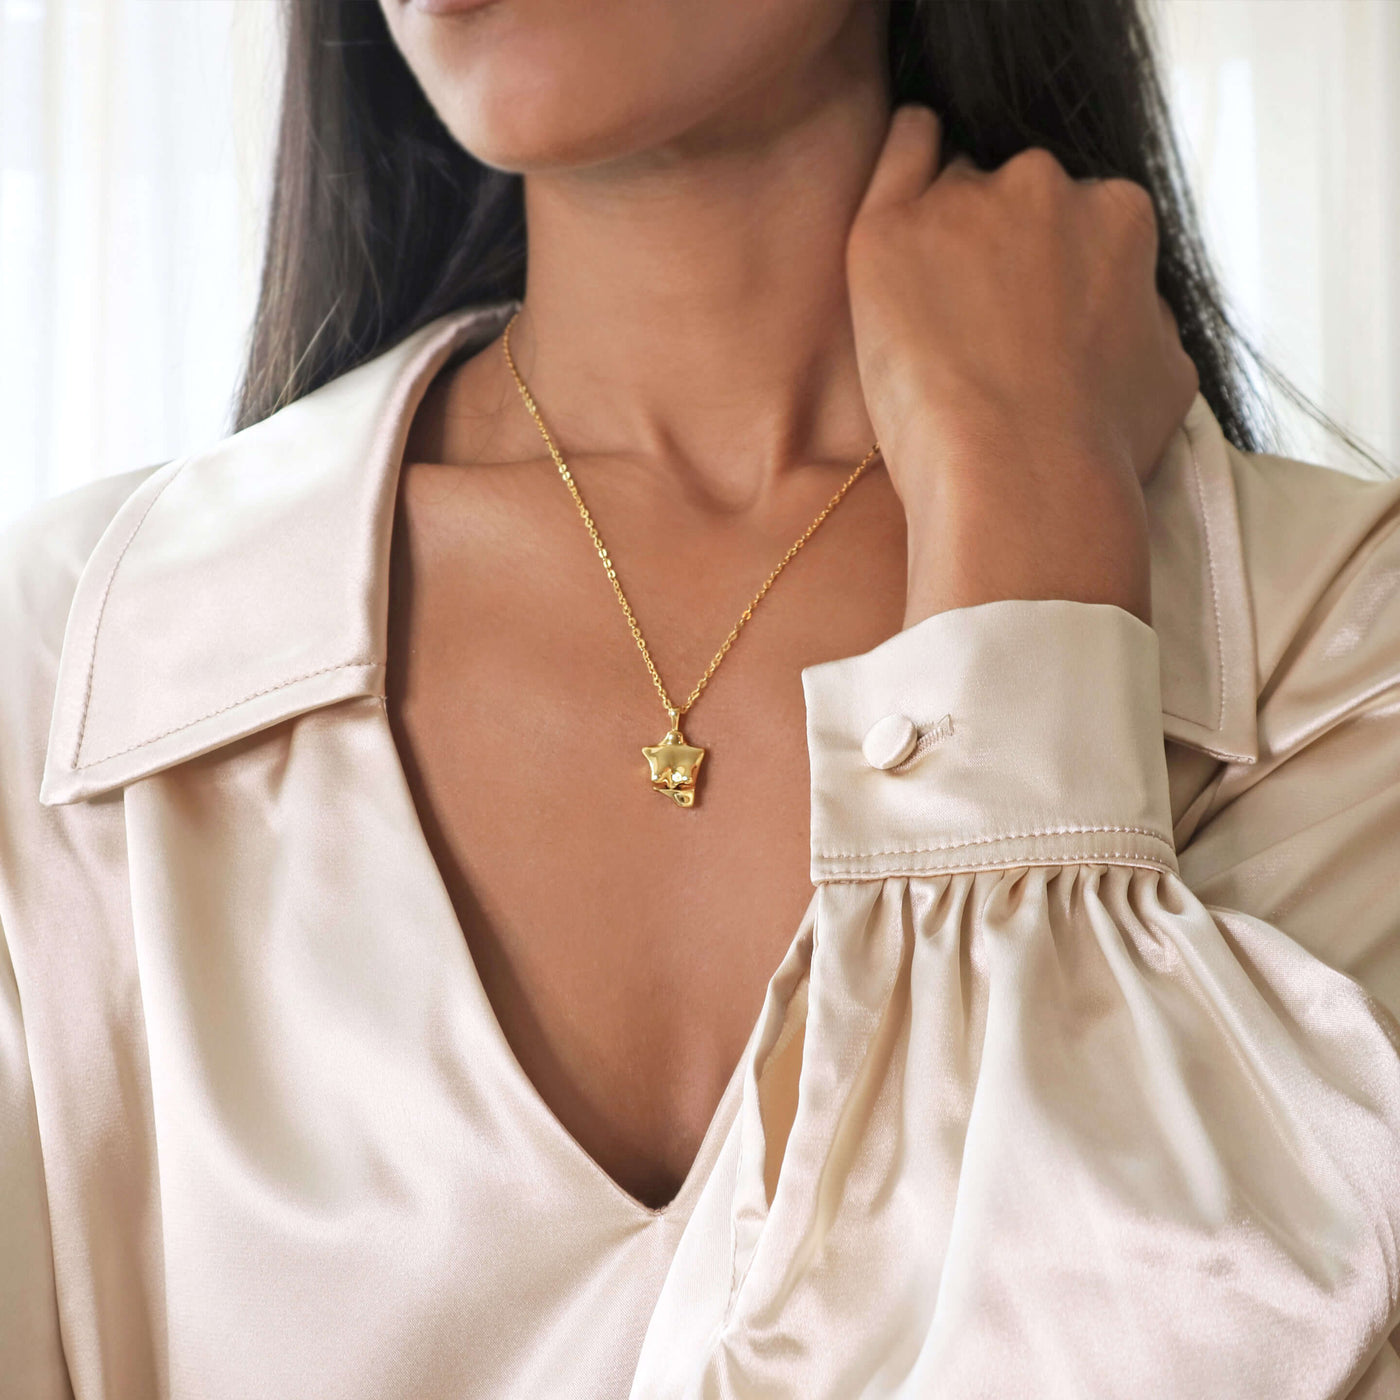 Female body gold pendant necklace, Rani & Co. 